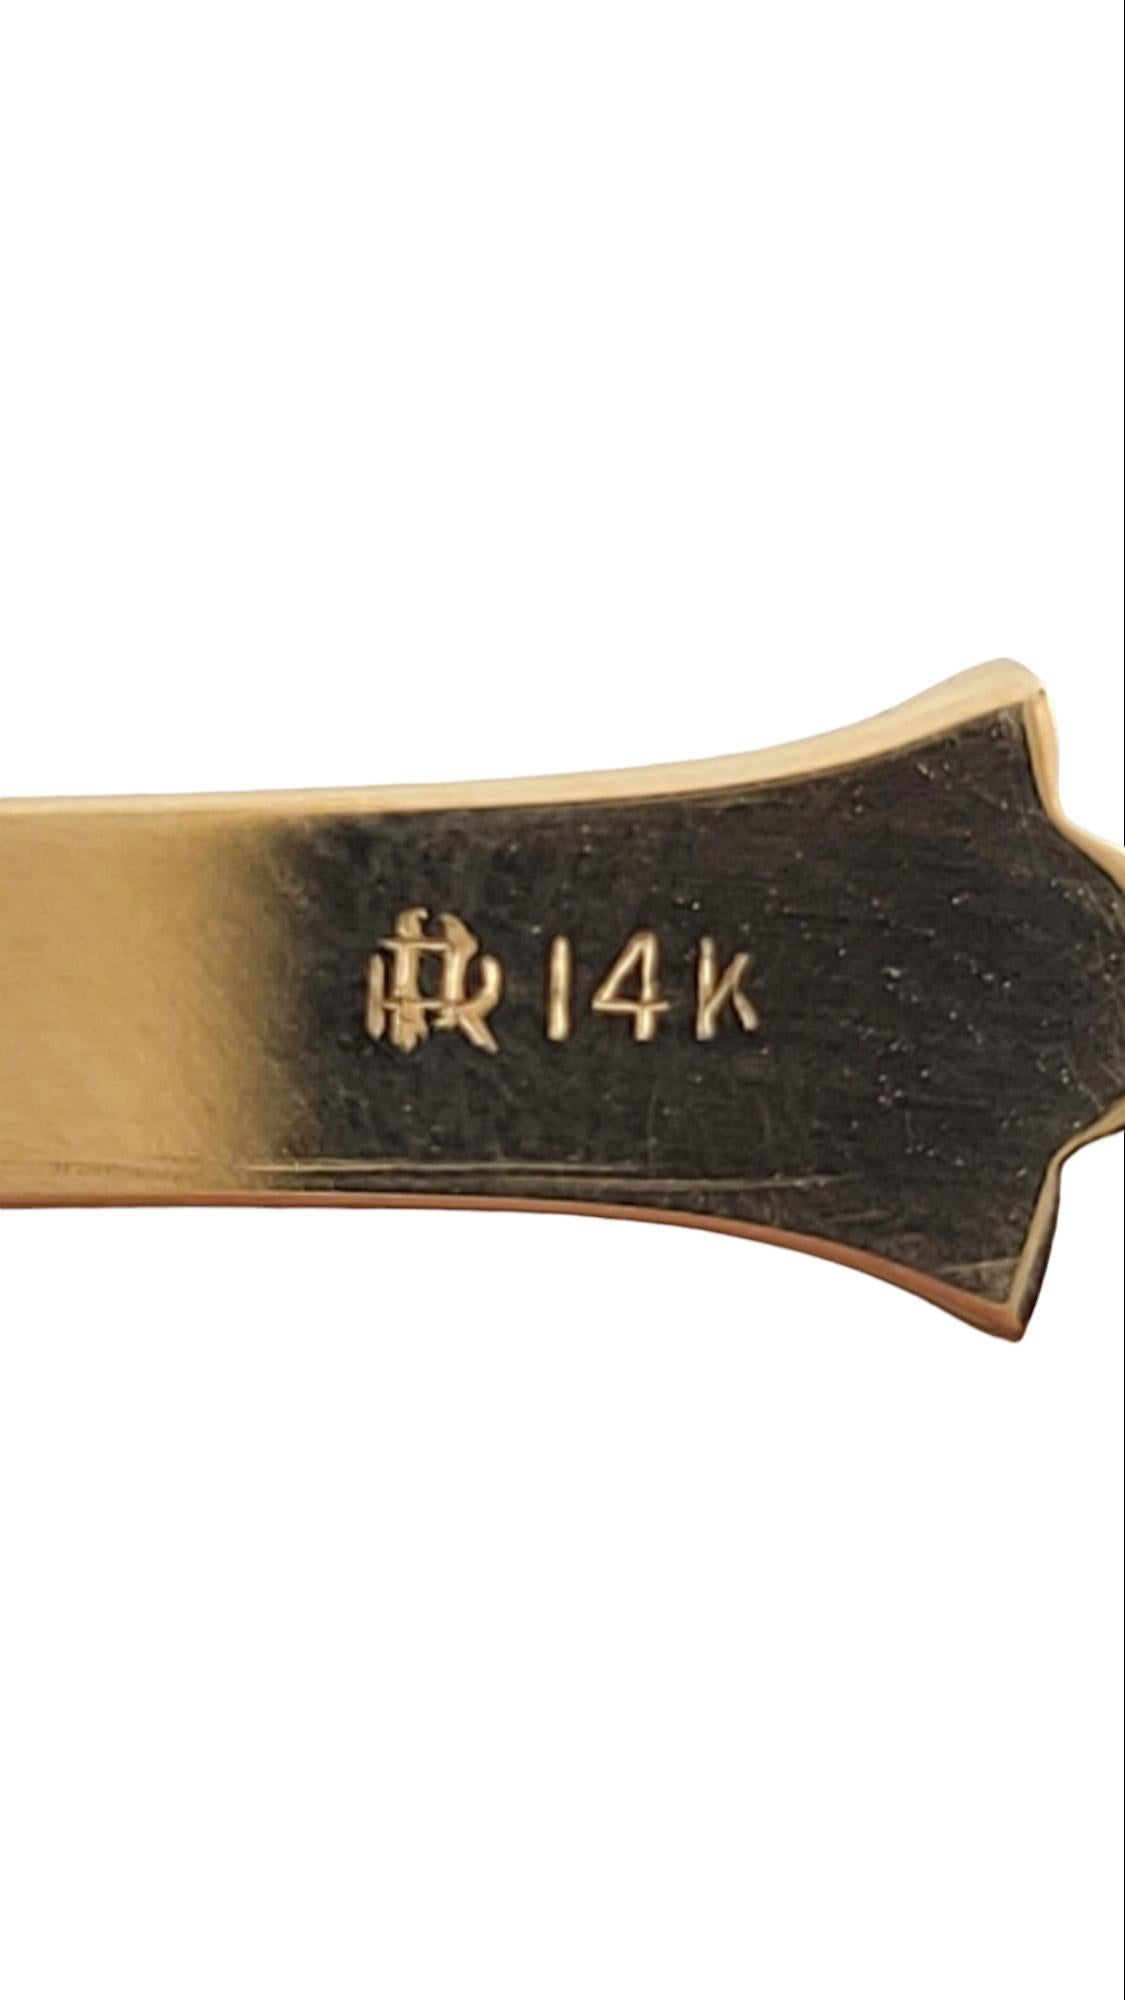  14K Yellow Gold Cross Pendant #15154 For Sale 1